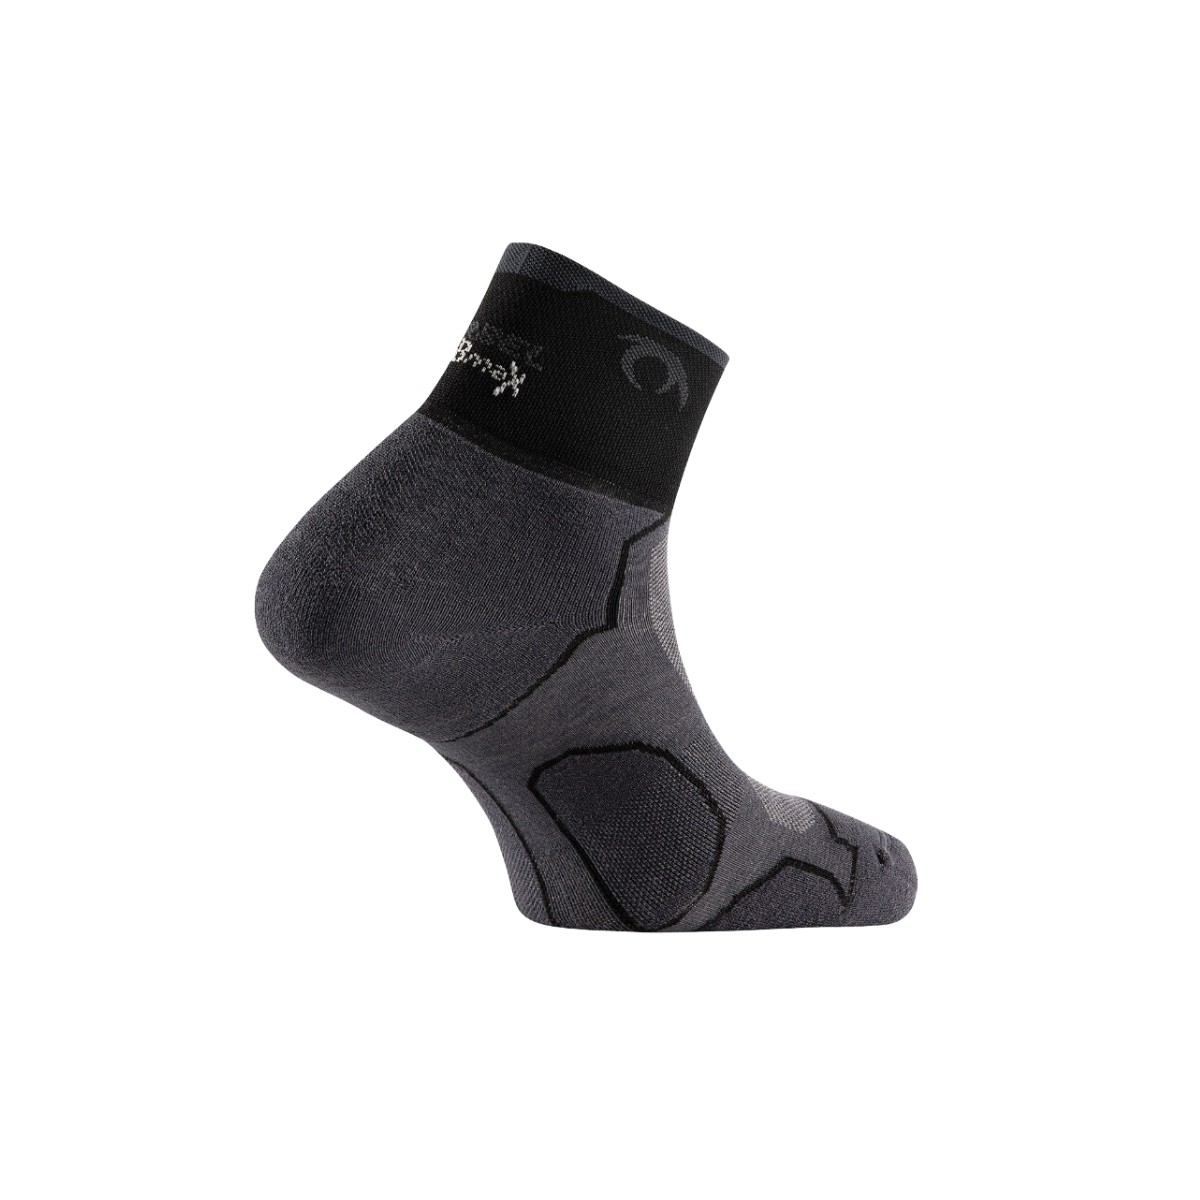 Socks Lurbel Desafio Three Grey Black, Size XL